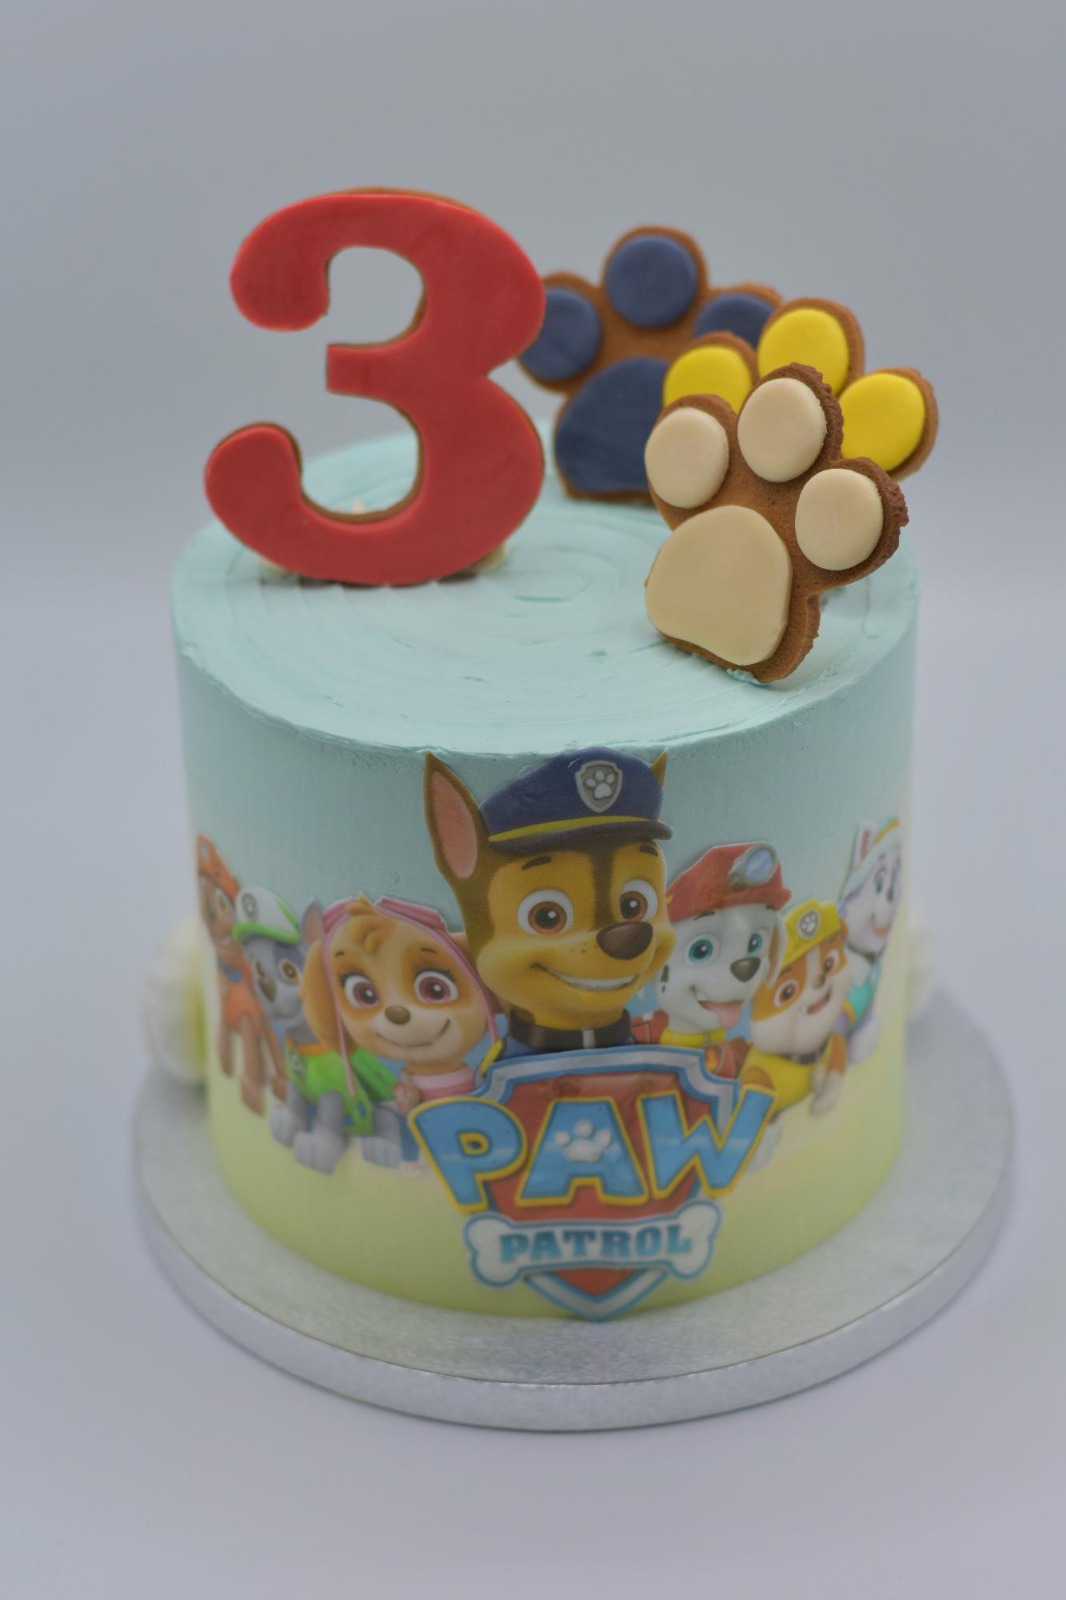 patpatrouille-cake